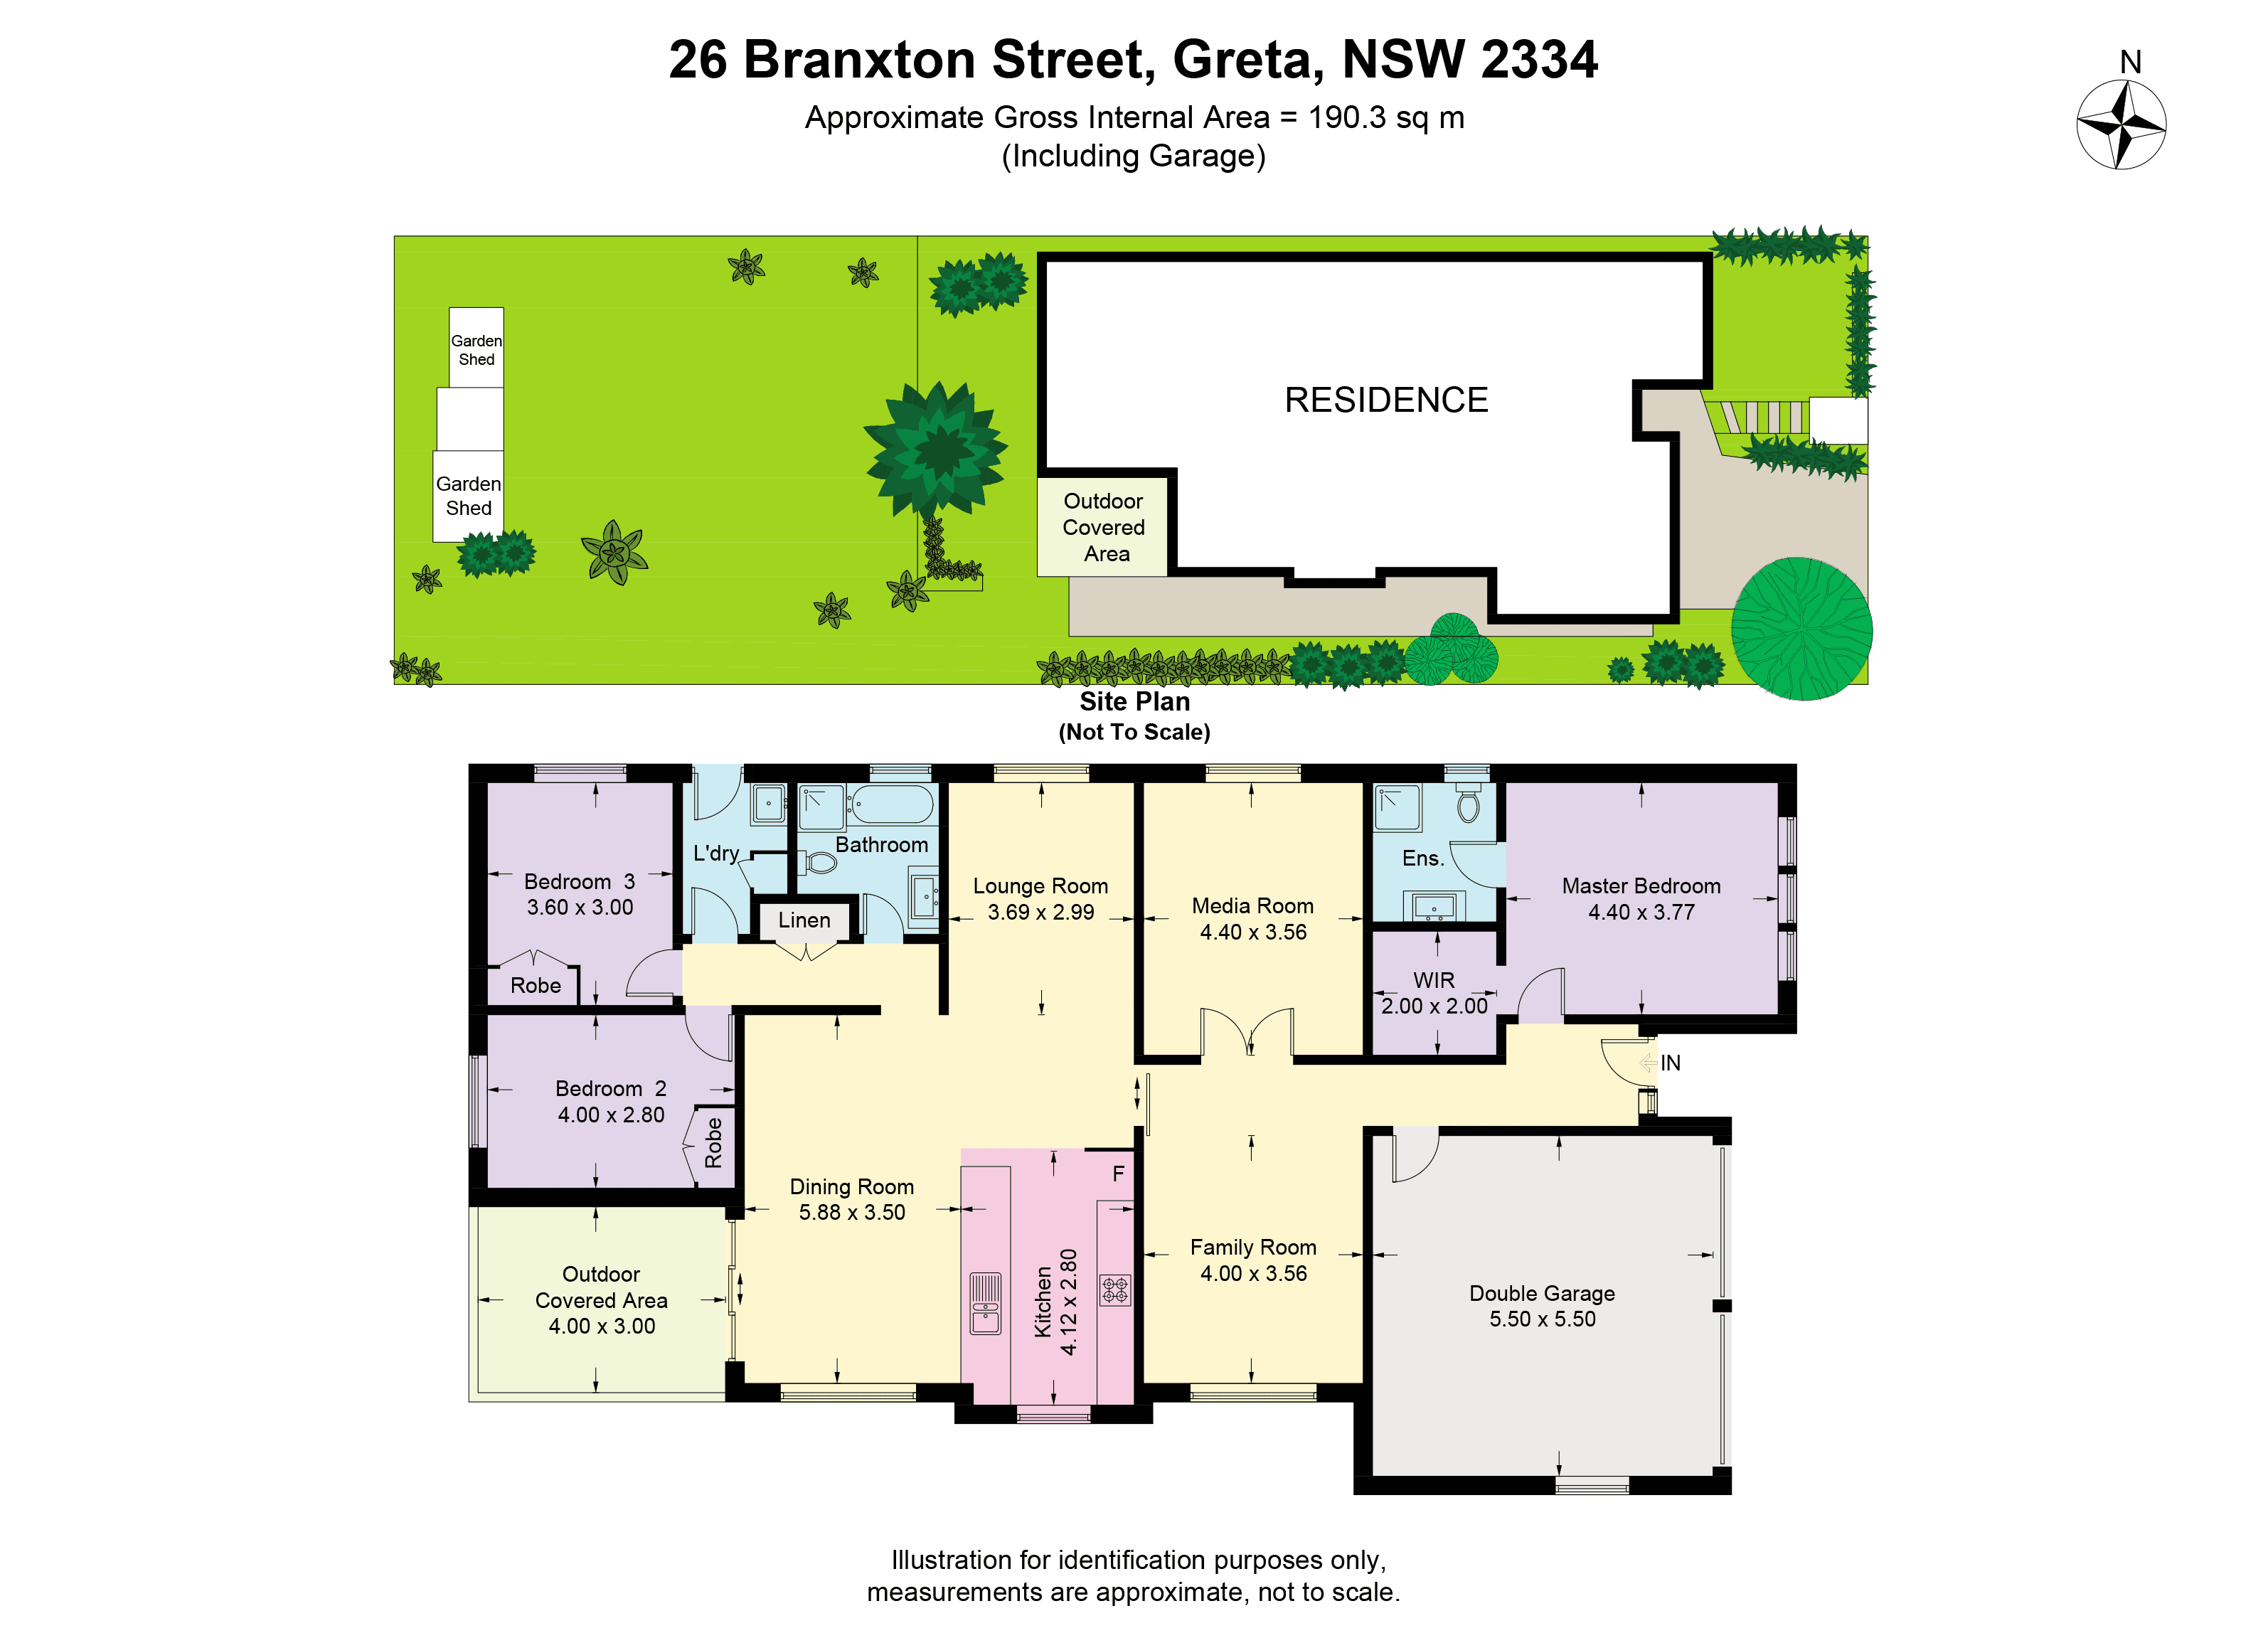 26 Branxton St, Greta, NSW 2334